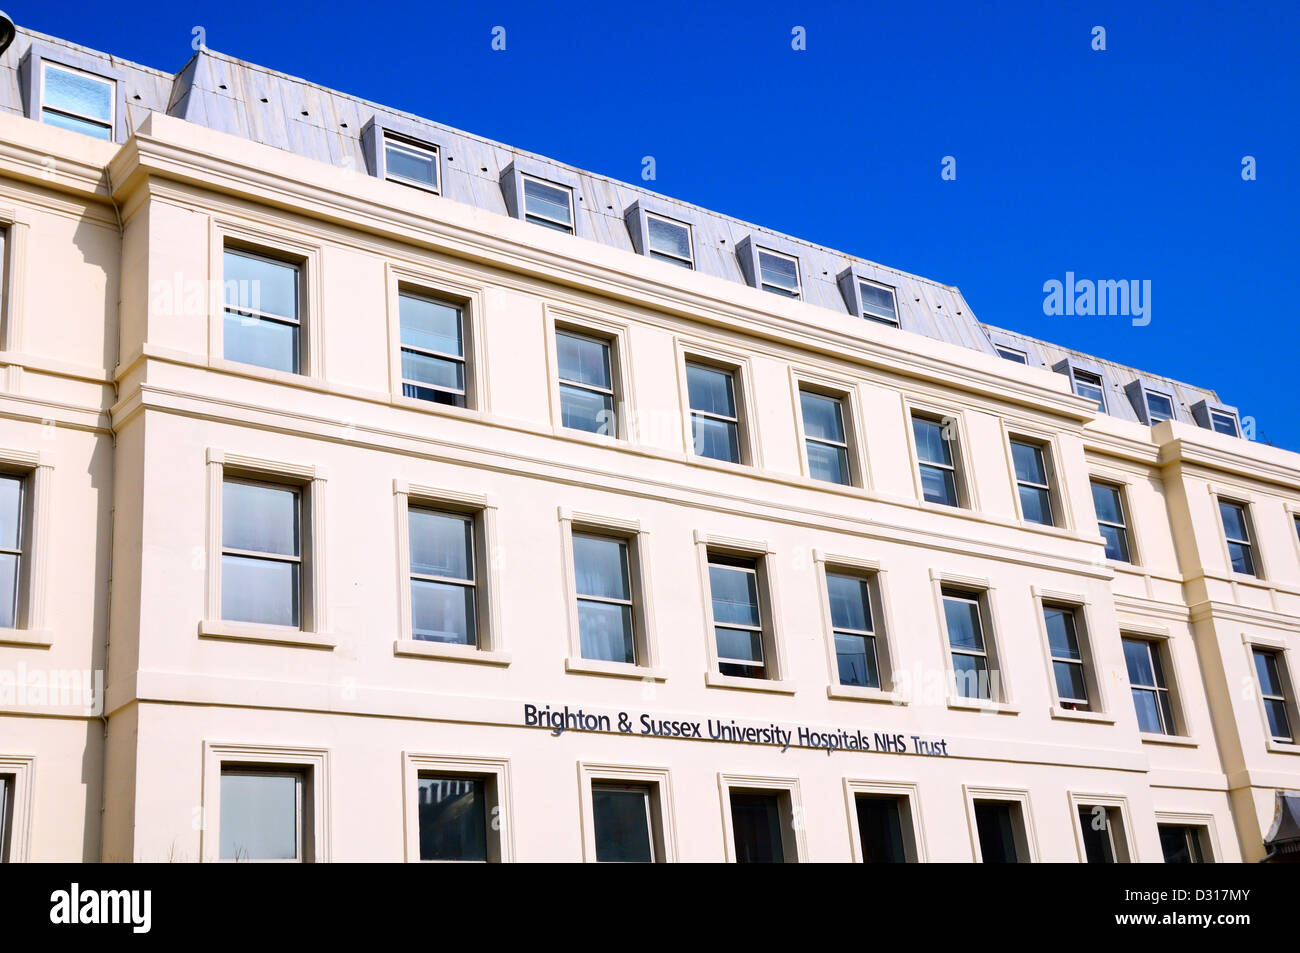 Brighton & Sussex University Hospitals NHS Trust, Kemp Town, Brighton, East Sussex, England, UK Stockfoto